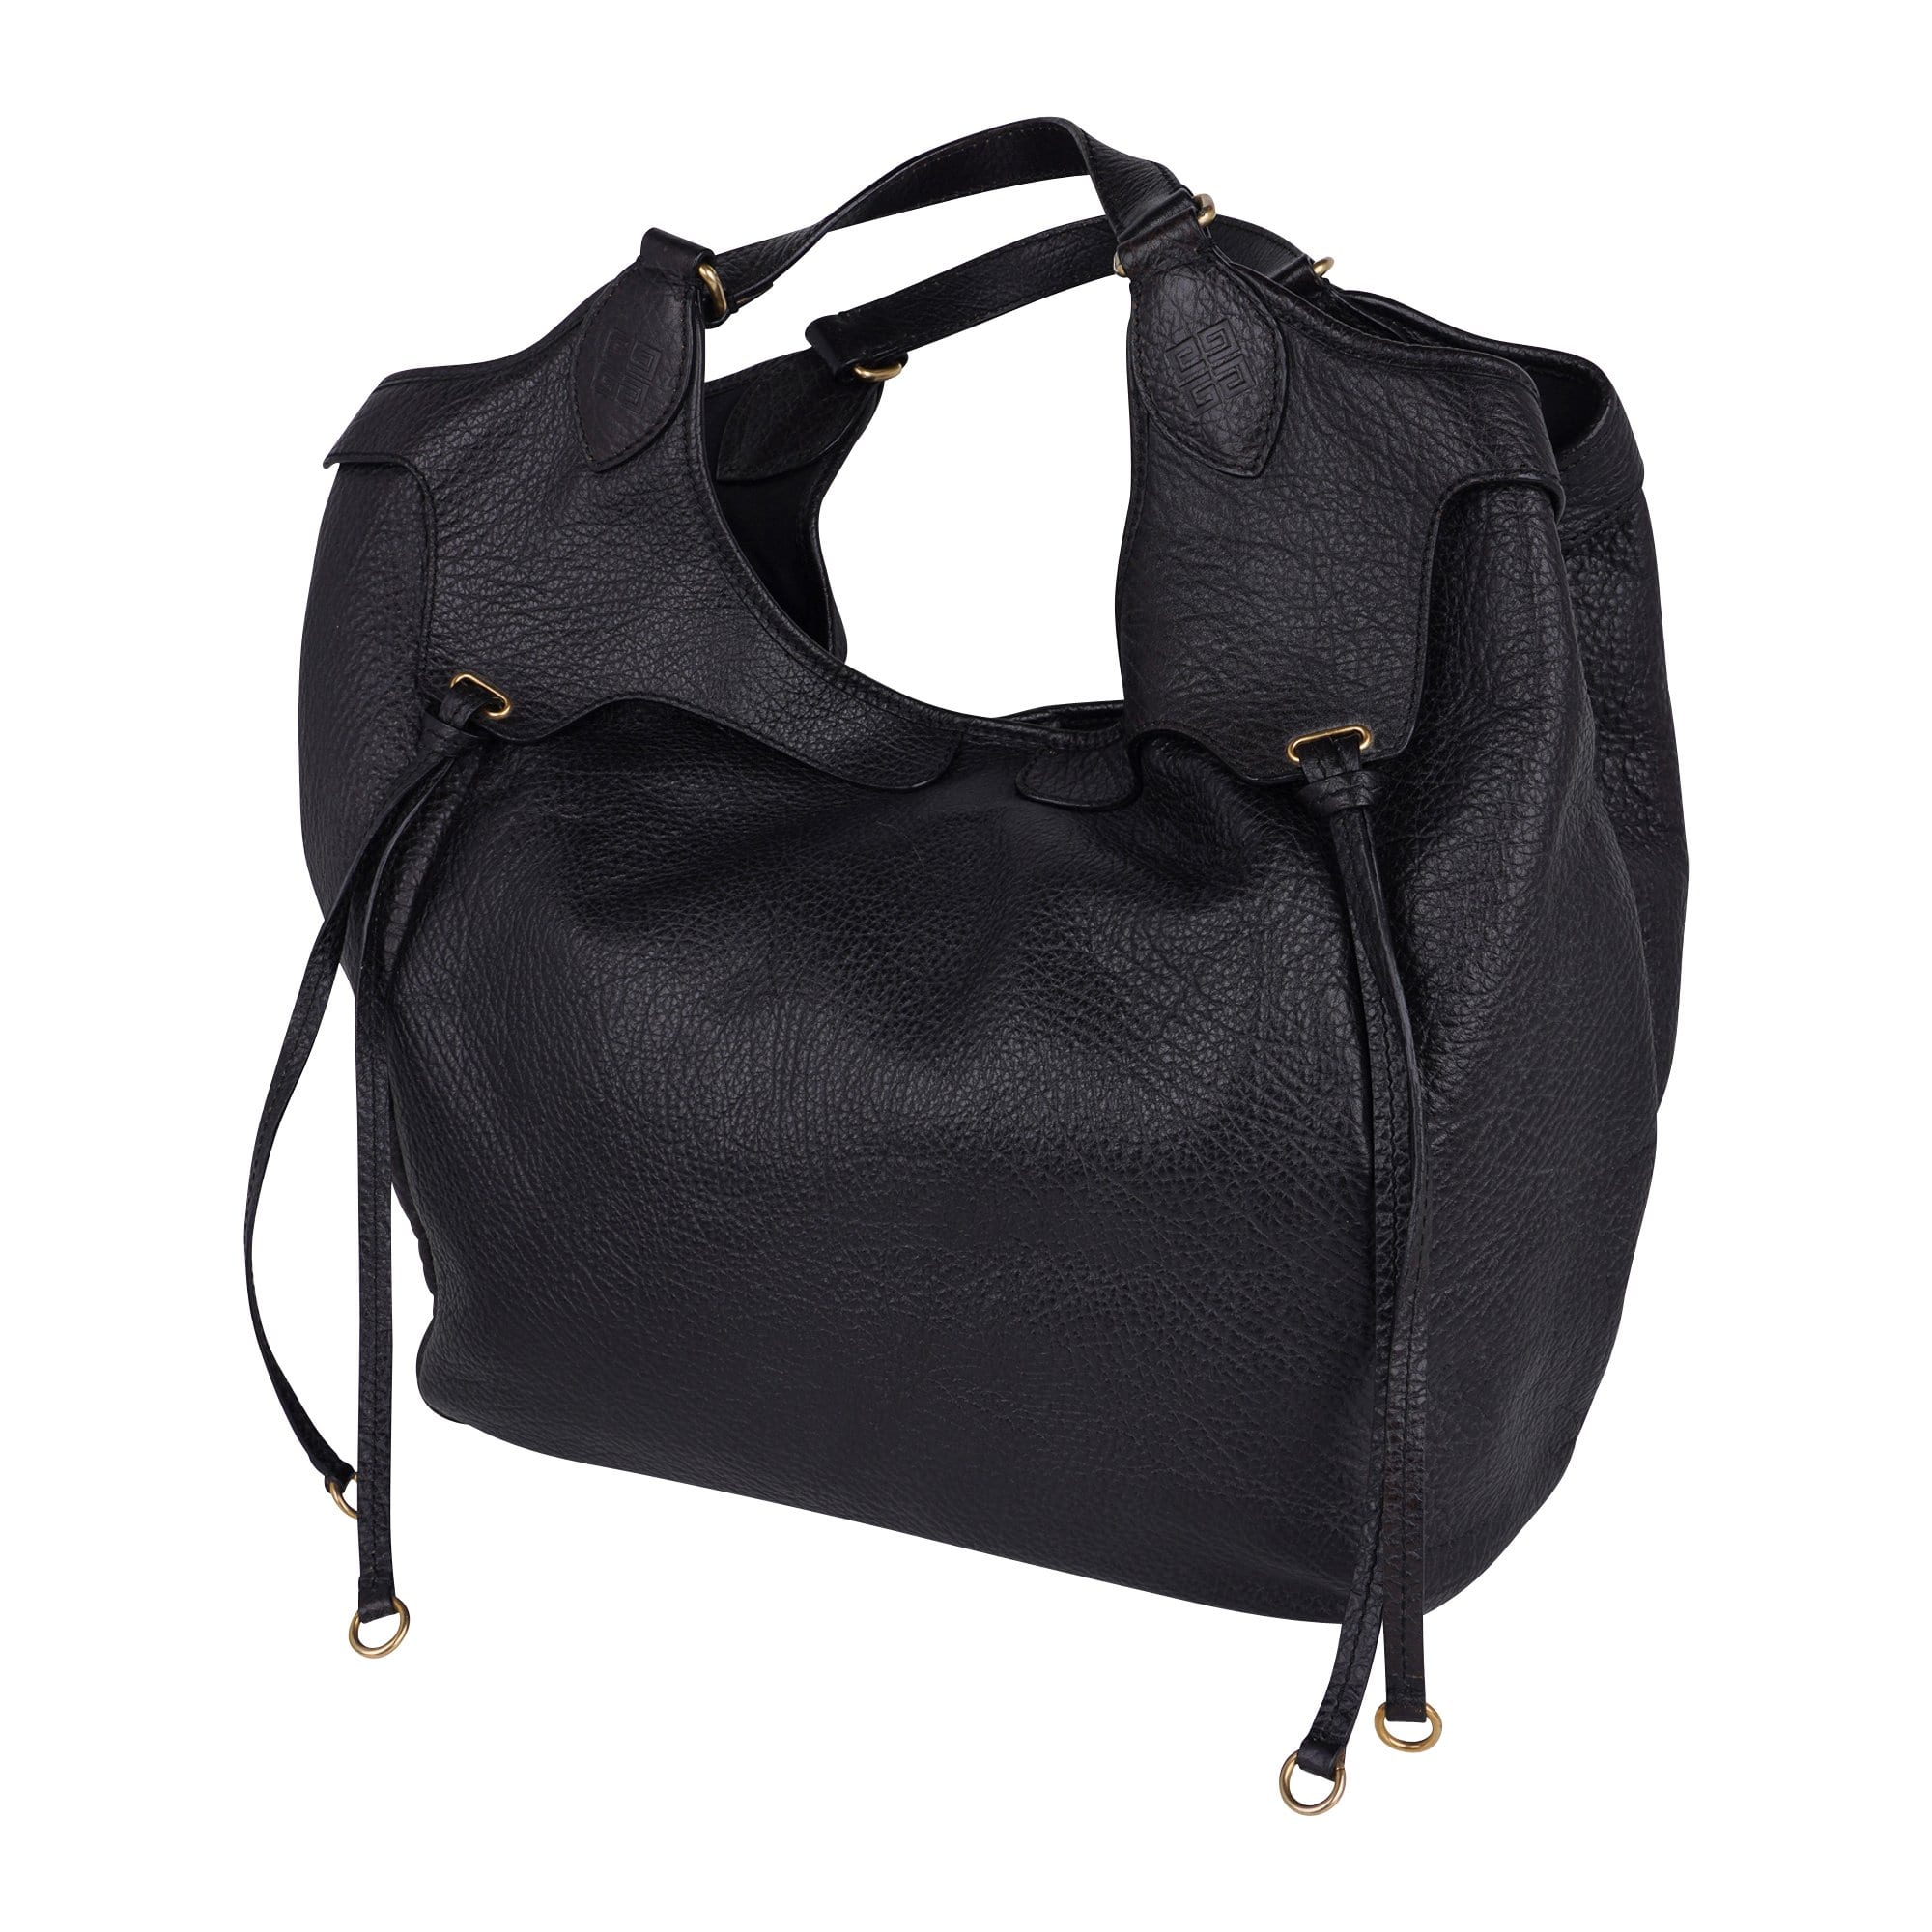 Givenchy Bag Large Textured Leather Tote Subtle Hardware Details